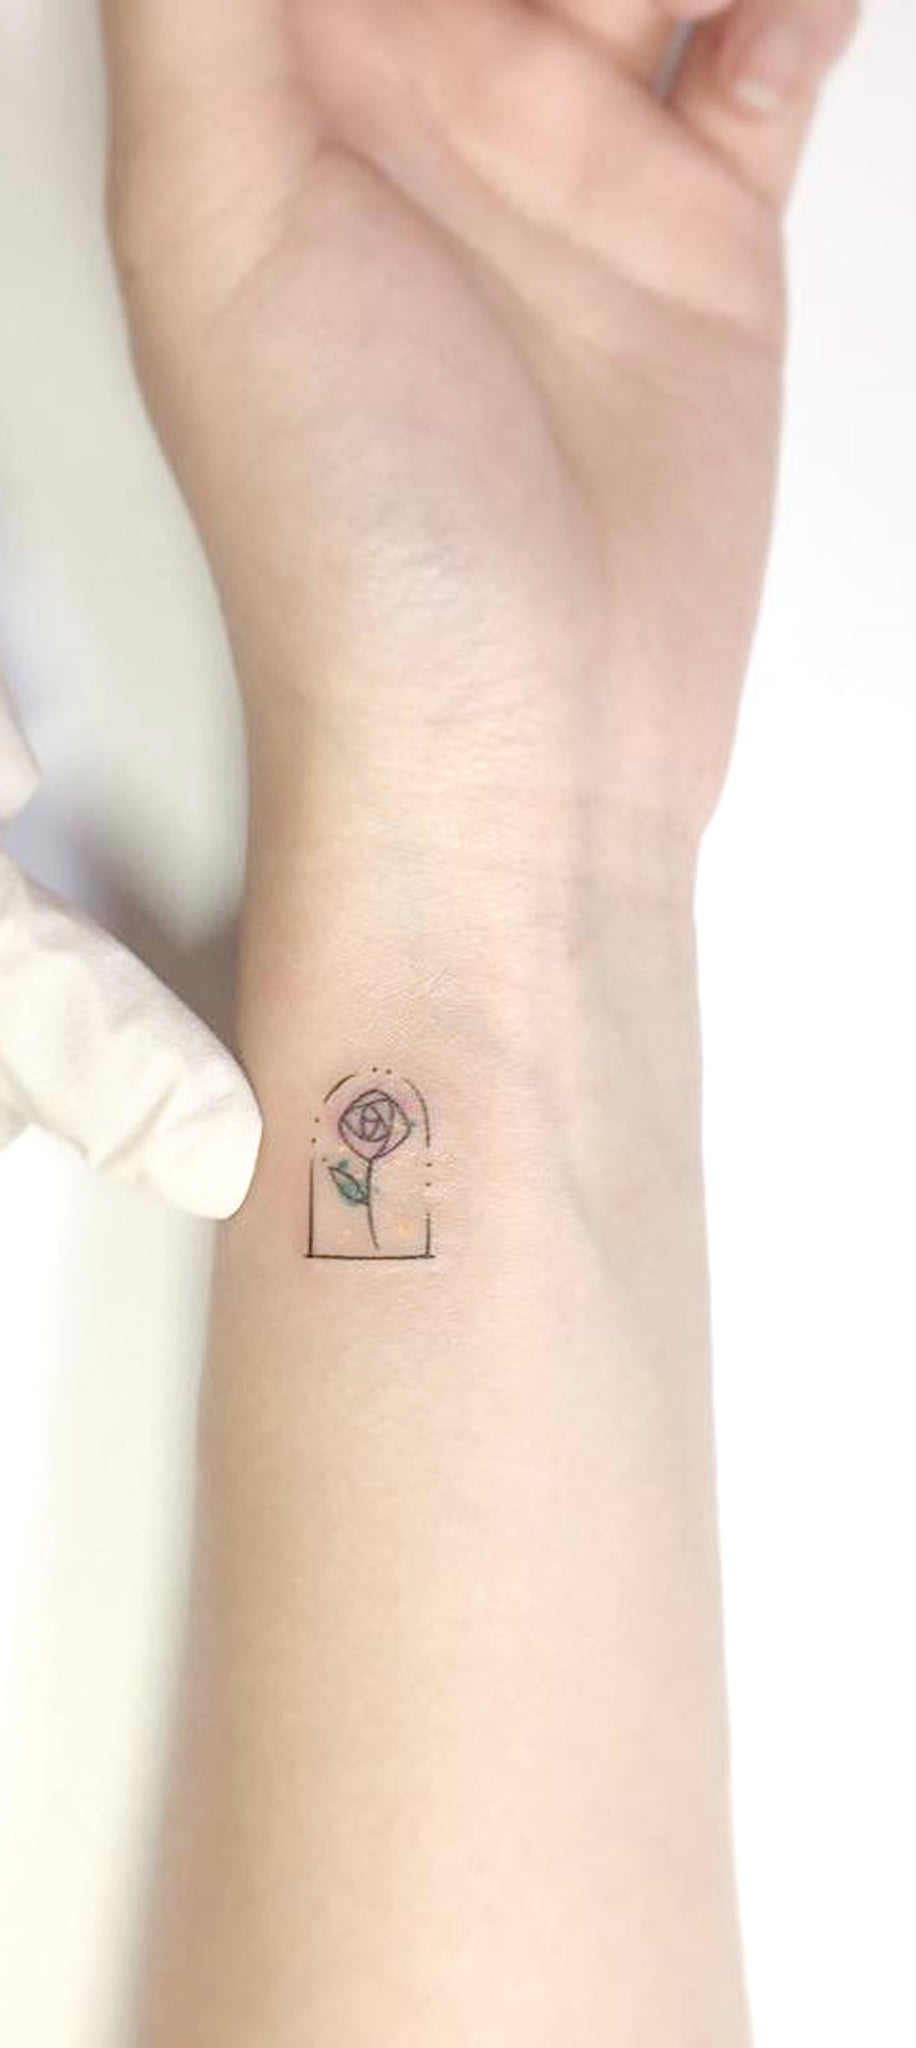 Small Flower Wrist Tattoo Ideas - Beauty and the Beast Disney Watercolor Rose Arm Tatouage - www.MyBodiArt.com 